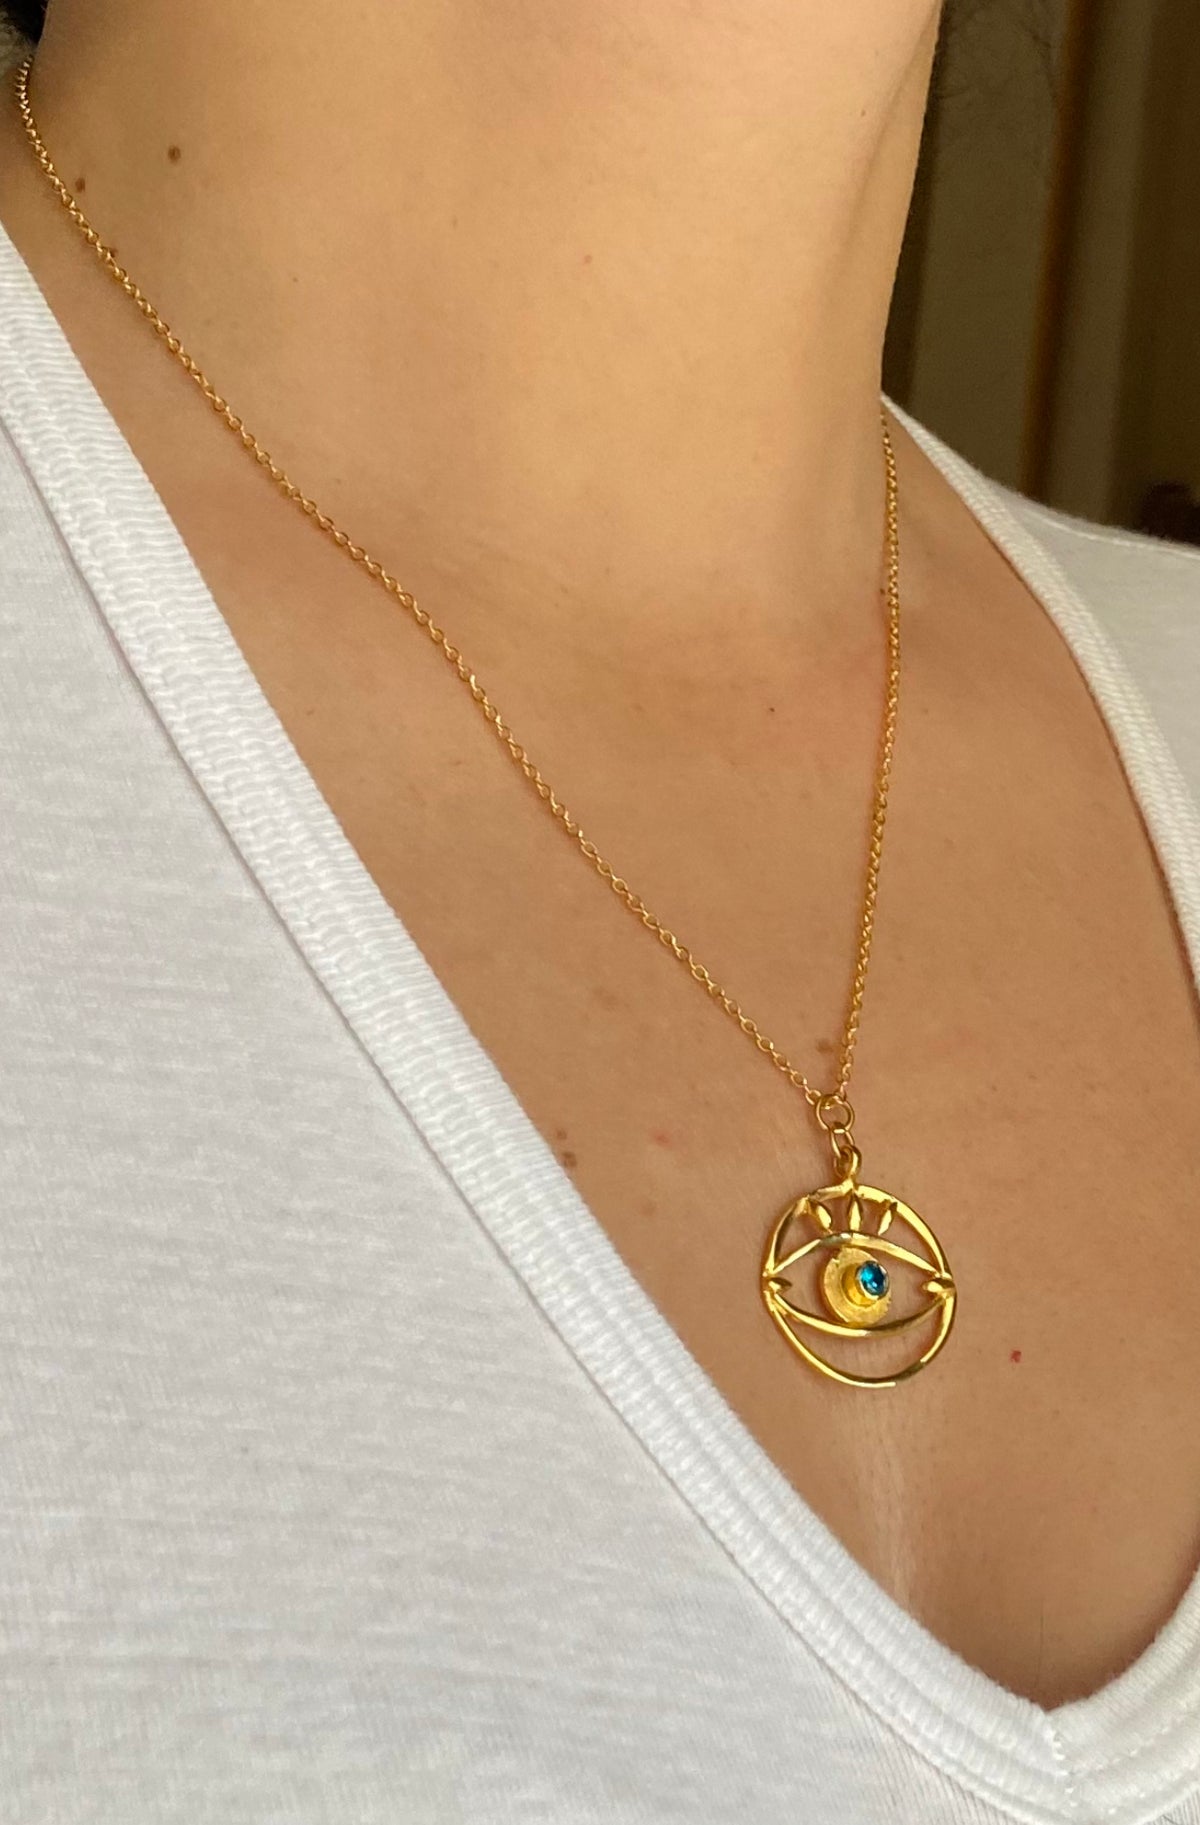 Evil eye necklace gold with blue gemstone